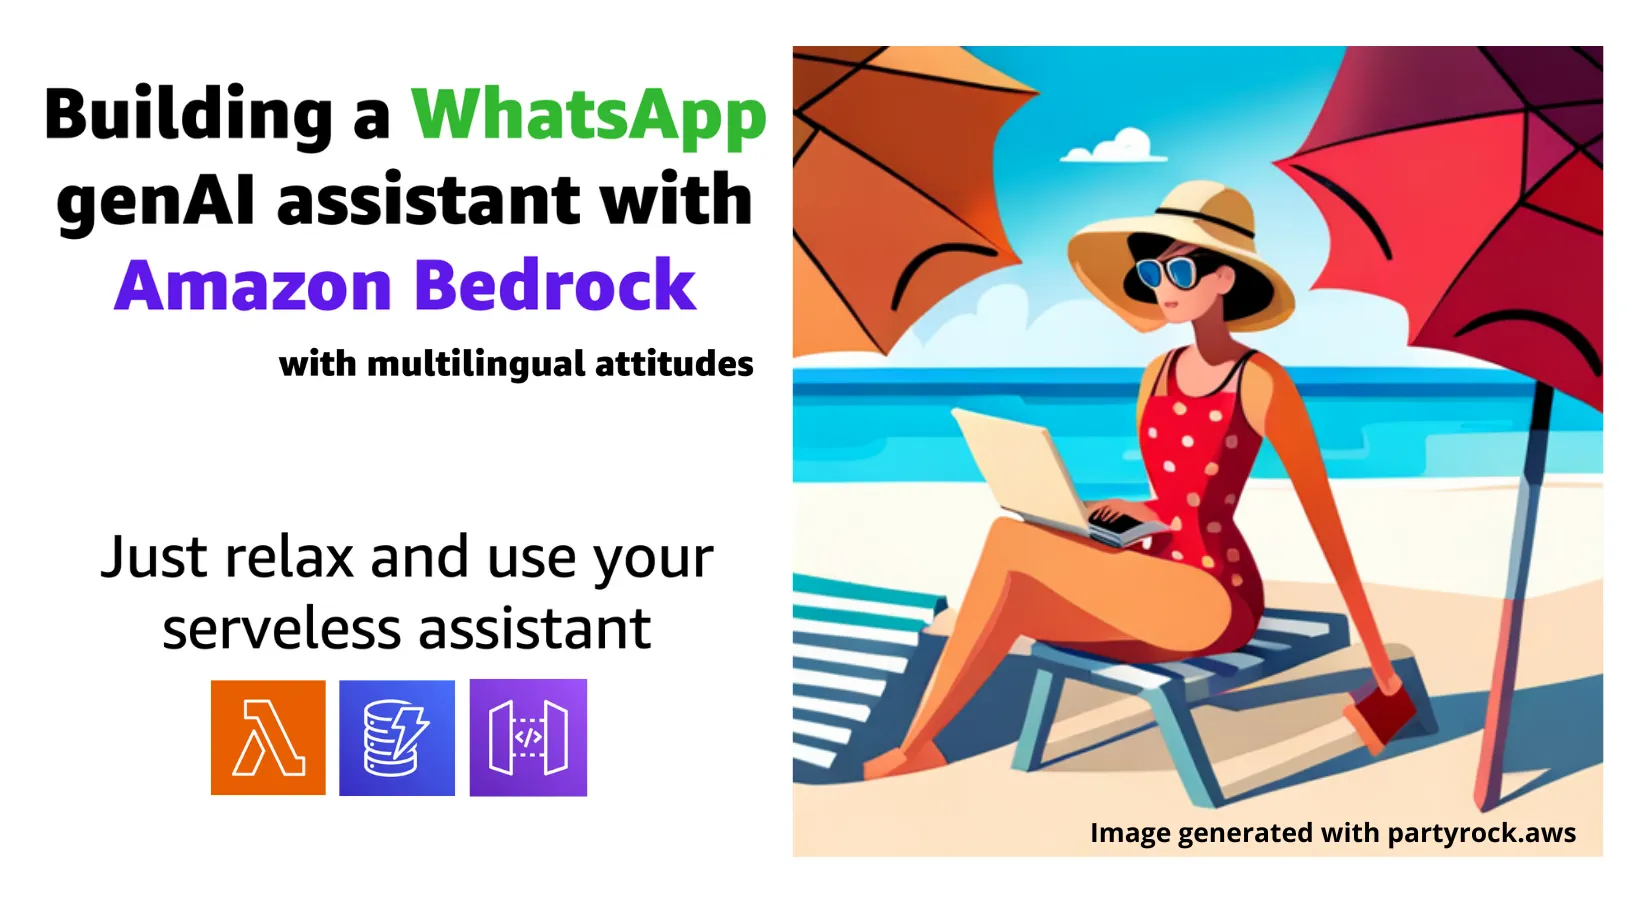 Building a WhatsApp genAI assistant with Amazon Bedrock